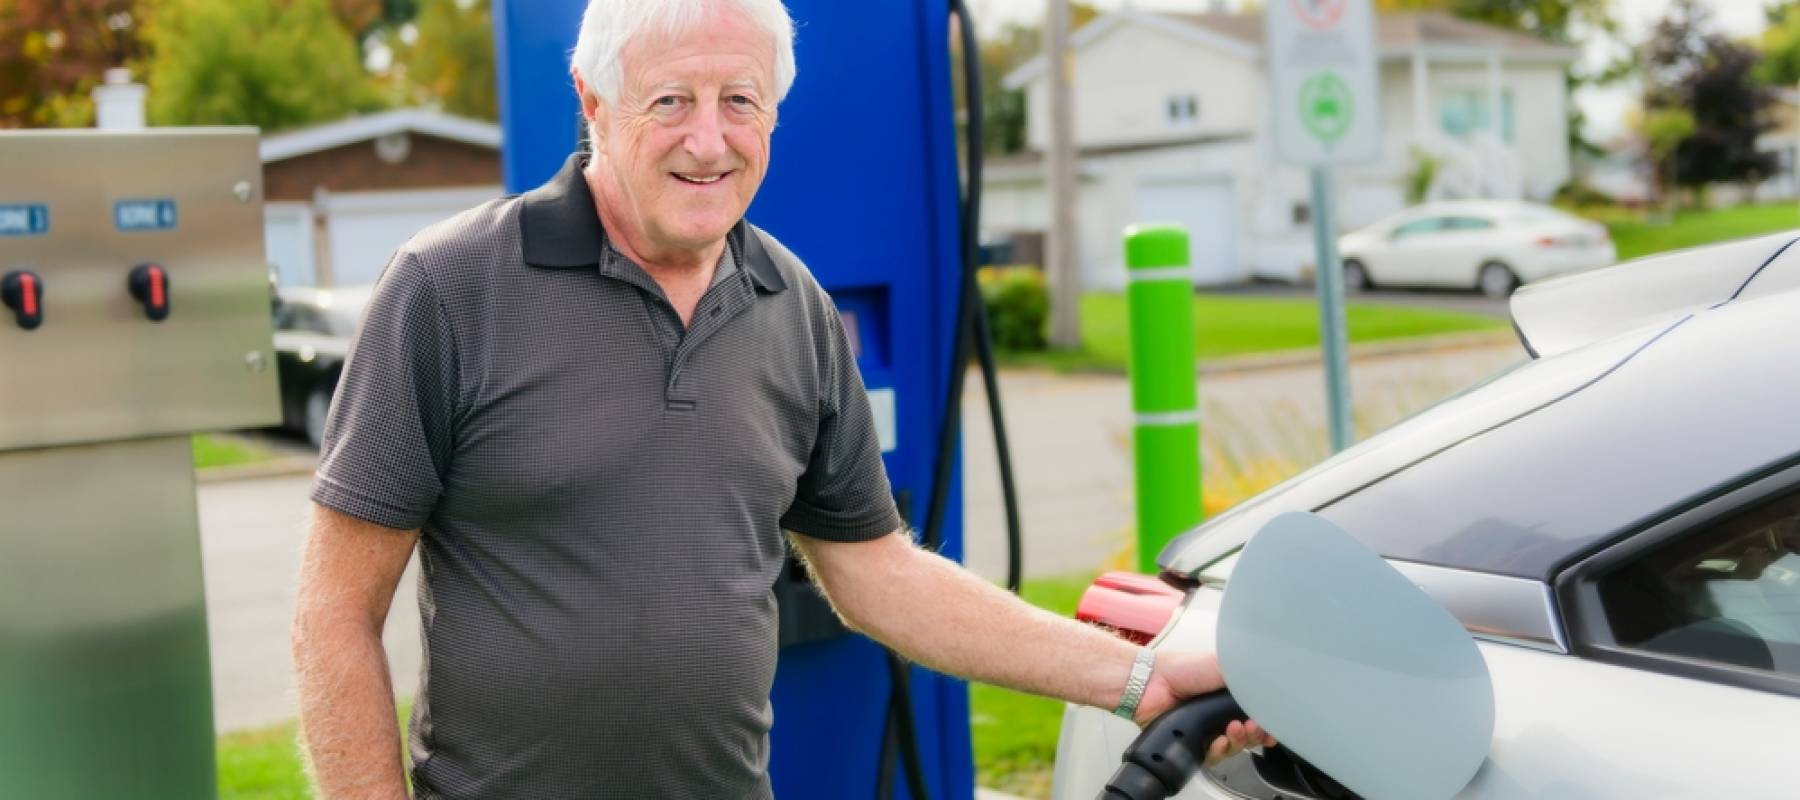 A senior man inserts plug into the electric car charging socket